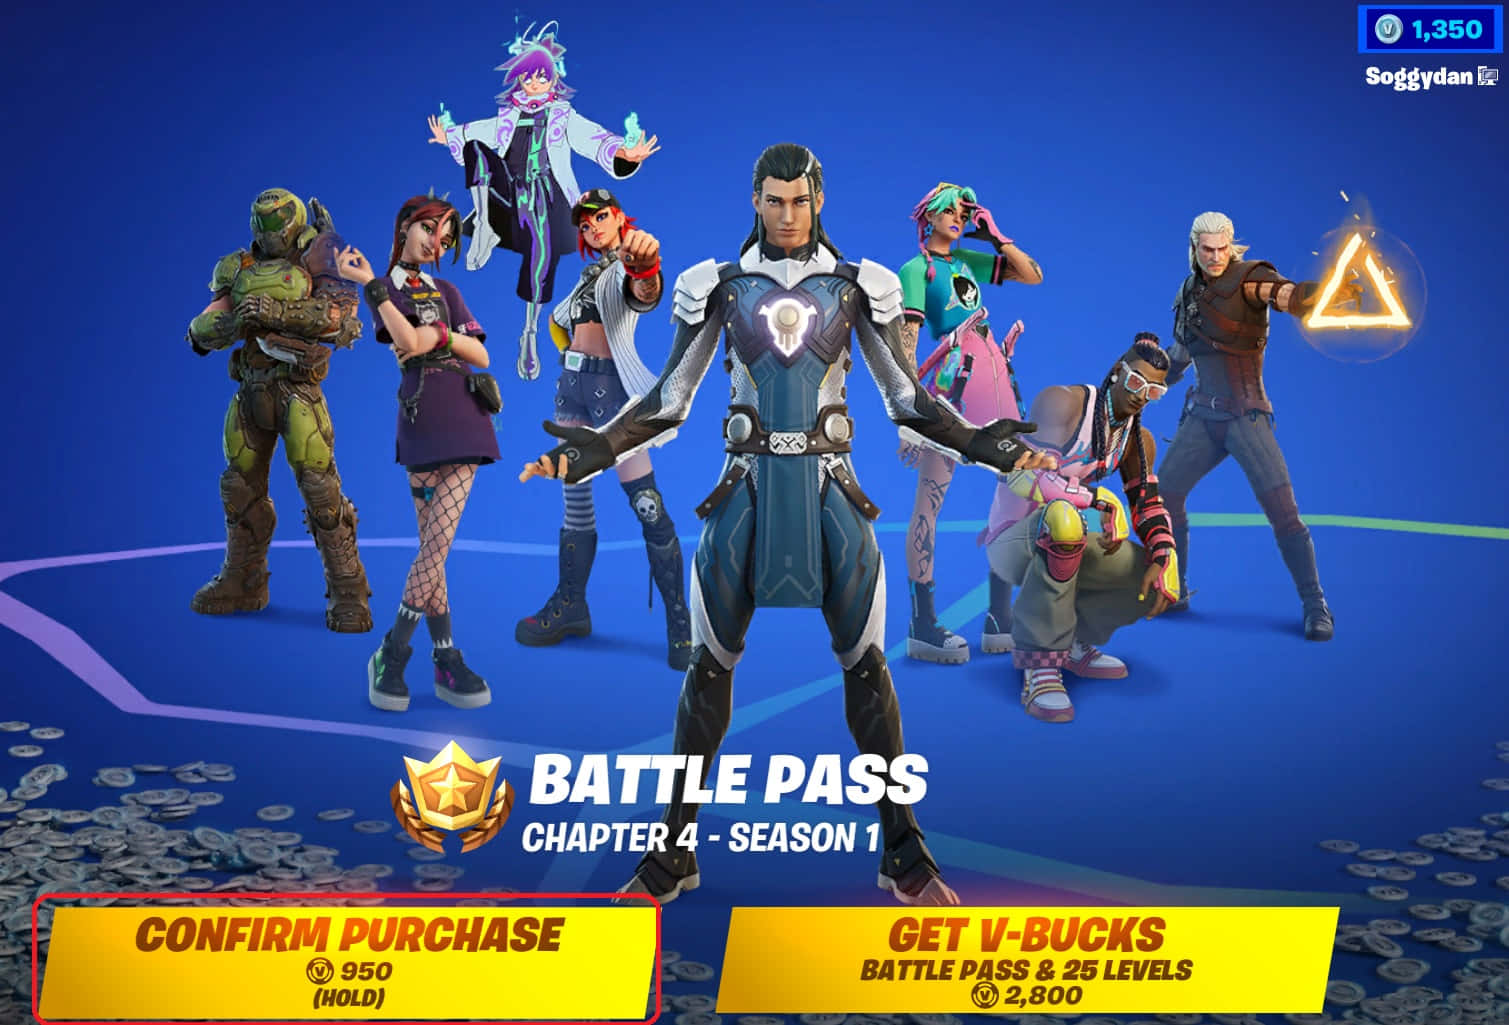 Unlock Rewards with the Battle Pass Wallpaper